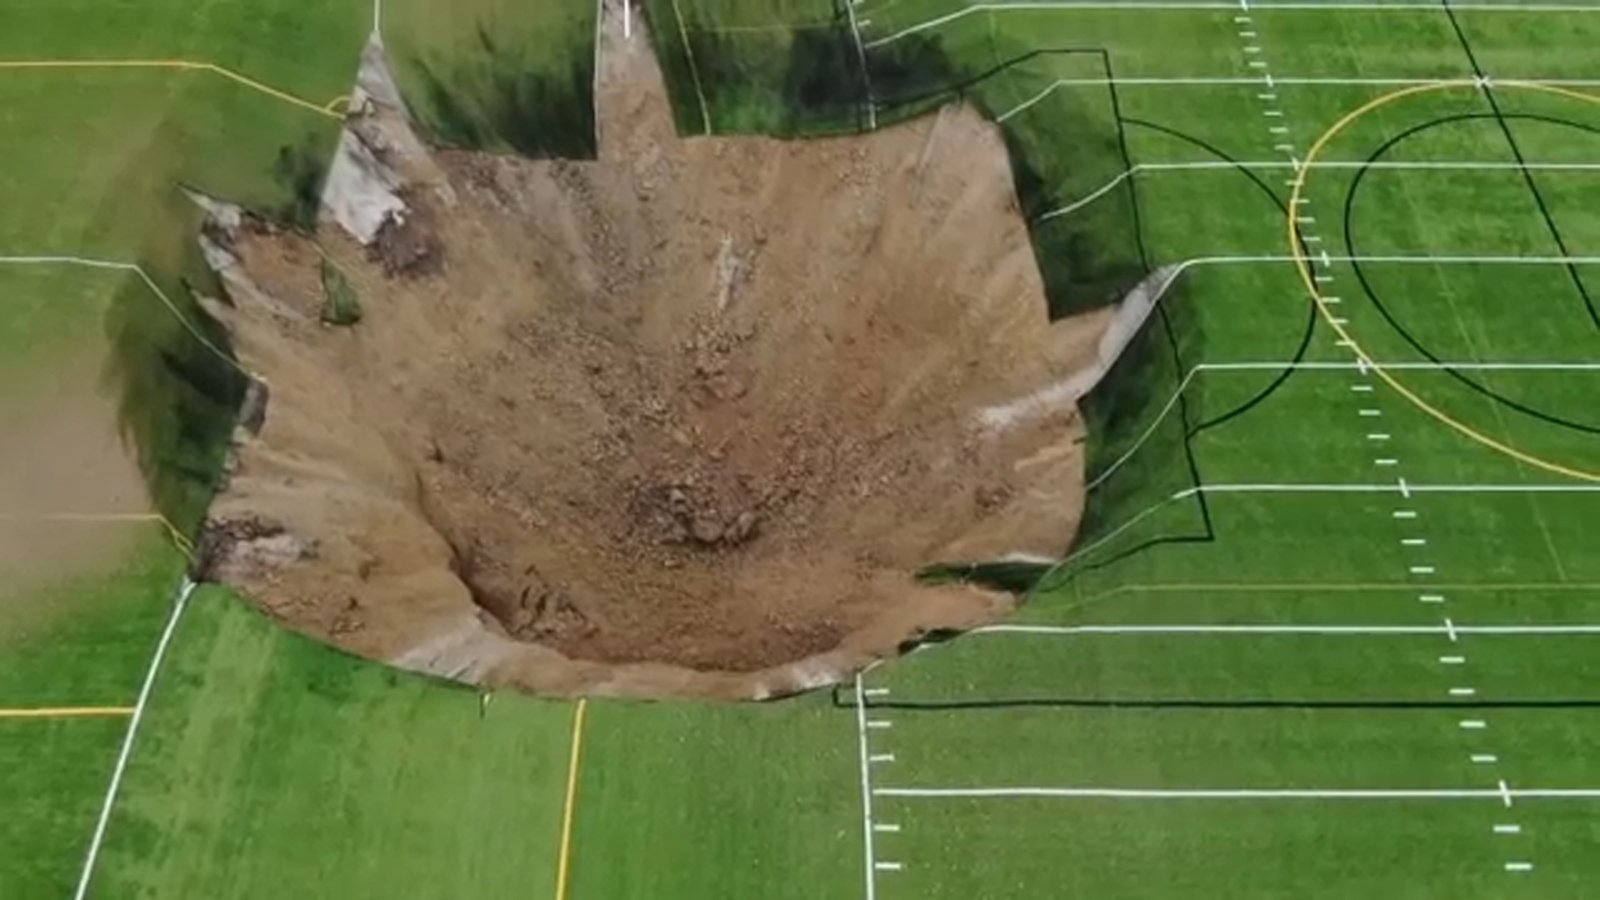 Video shows 100-foot-wide sinkhole open up under soccer field in Illinois